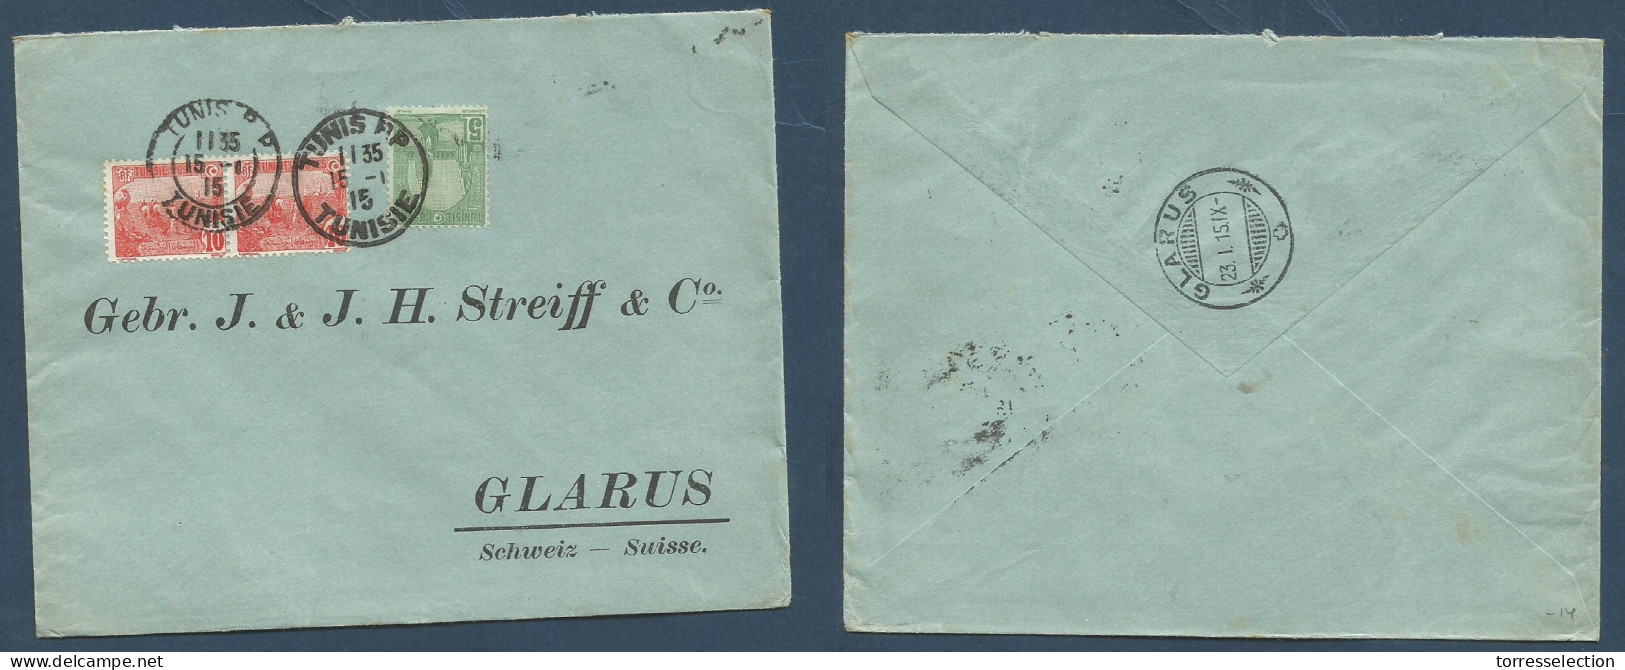 TUNISIA. 1915 (15 Jan) GPO - Glarus, Switzerland (23 Jan) Multifkd Colorful Envelope. Nice Item. XSALE. - Tunisia